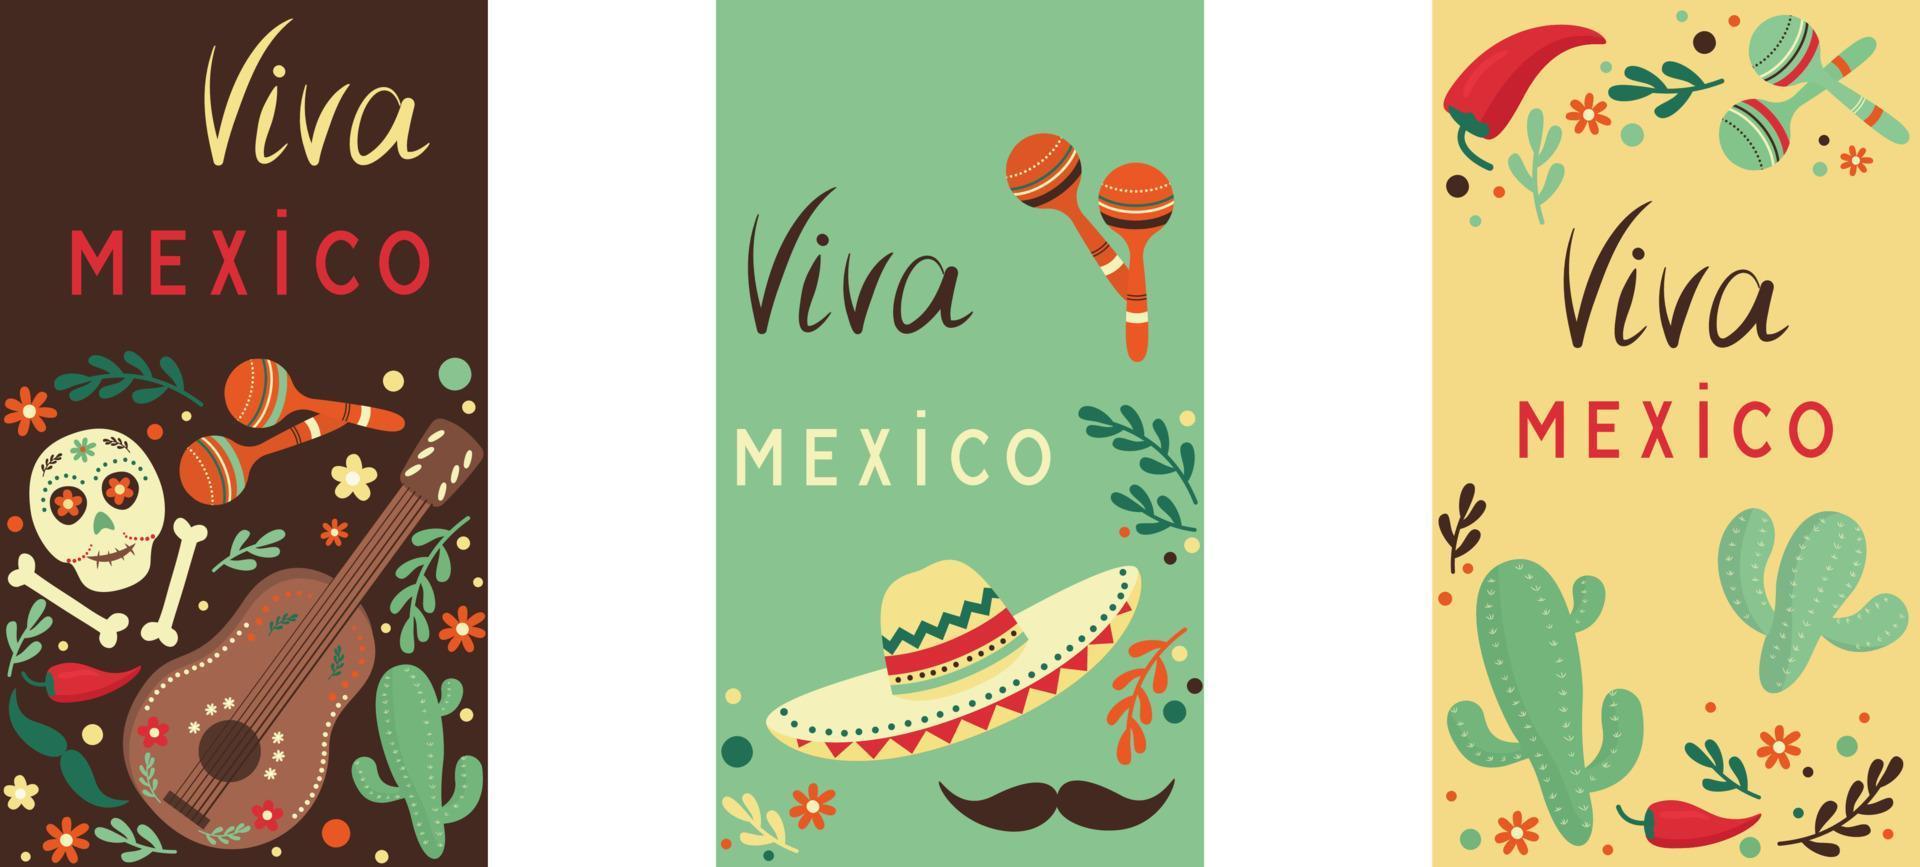 Mexicaans posters verzameling vector